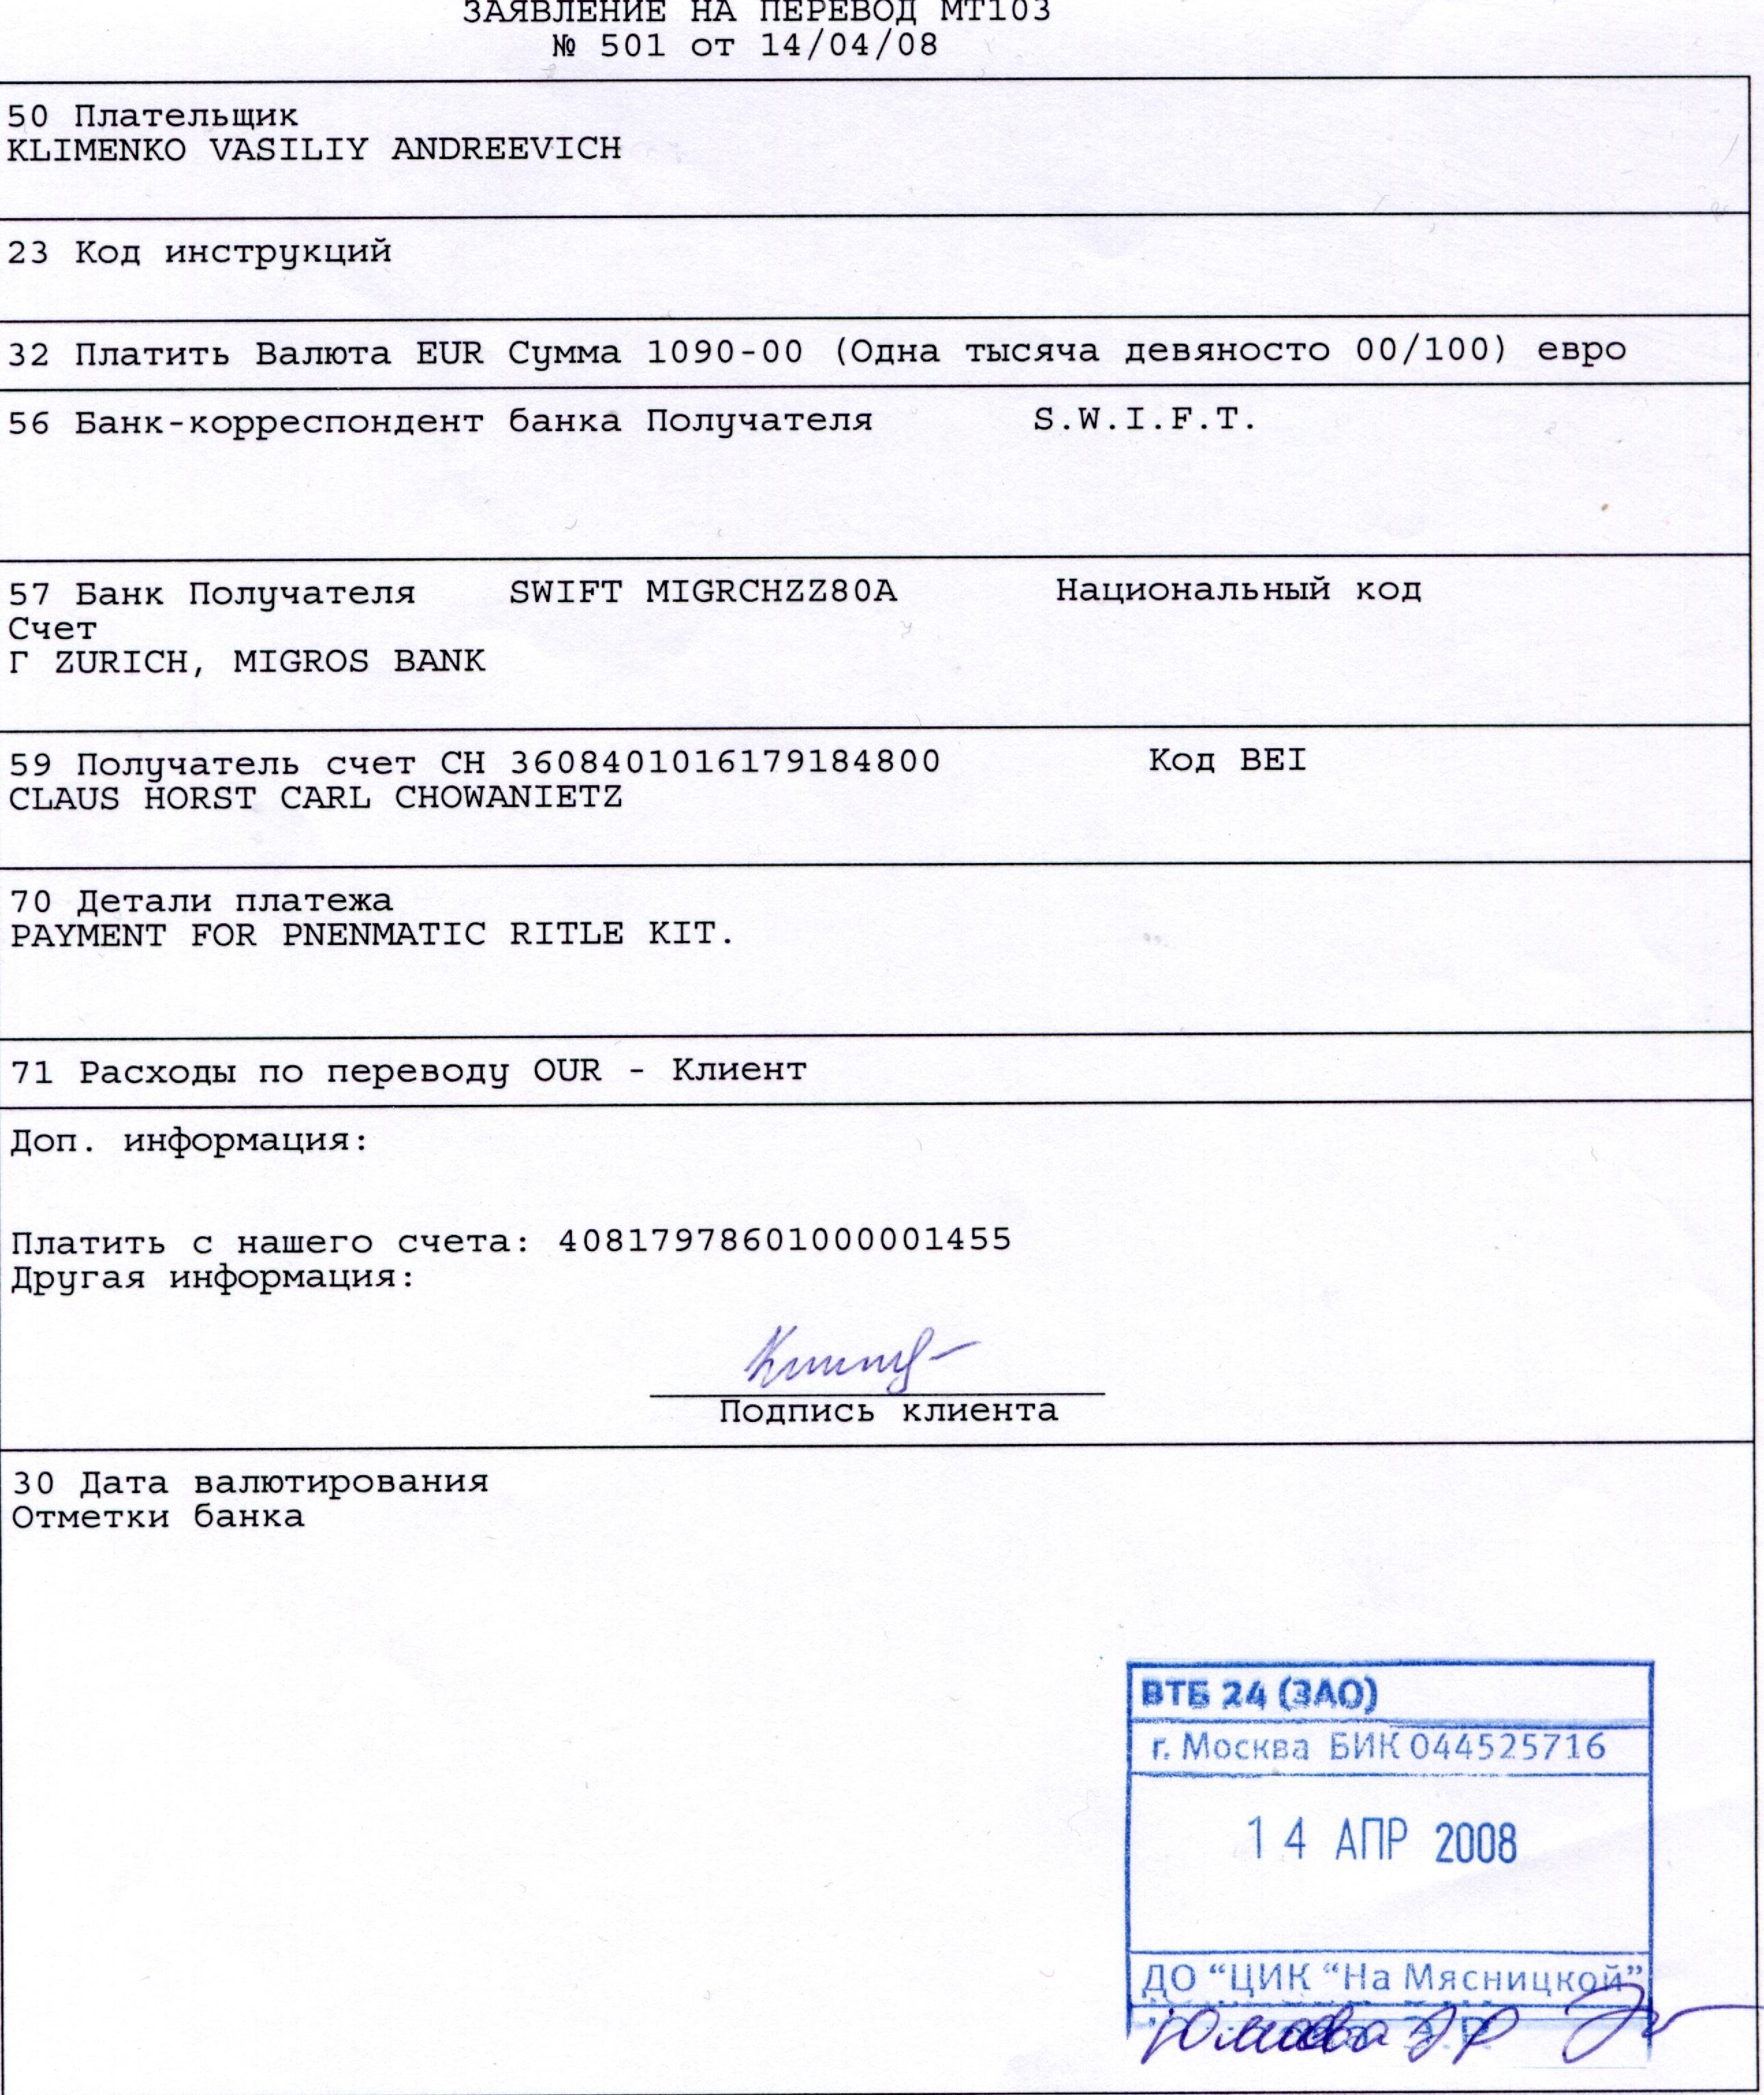 invoice payment details scam in gun shop germangunsde guns lot 2582 X 3066